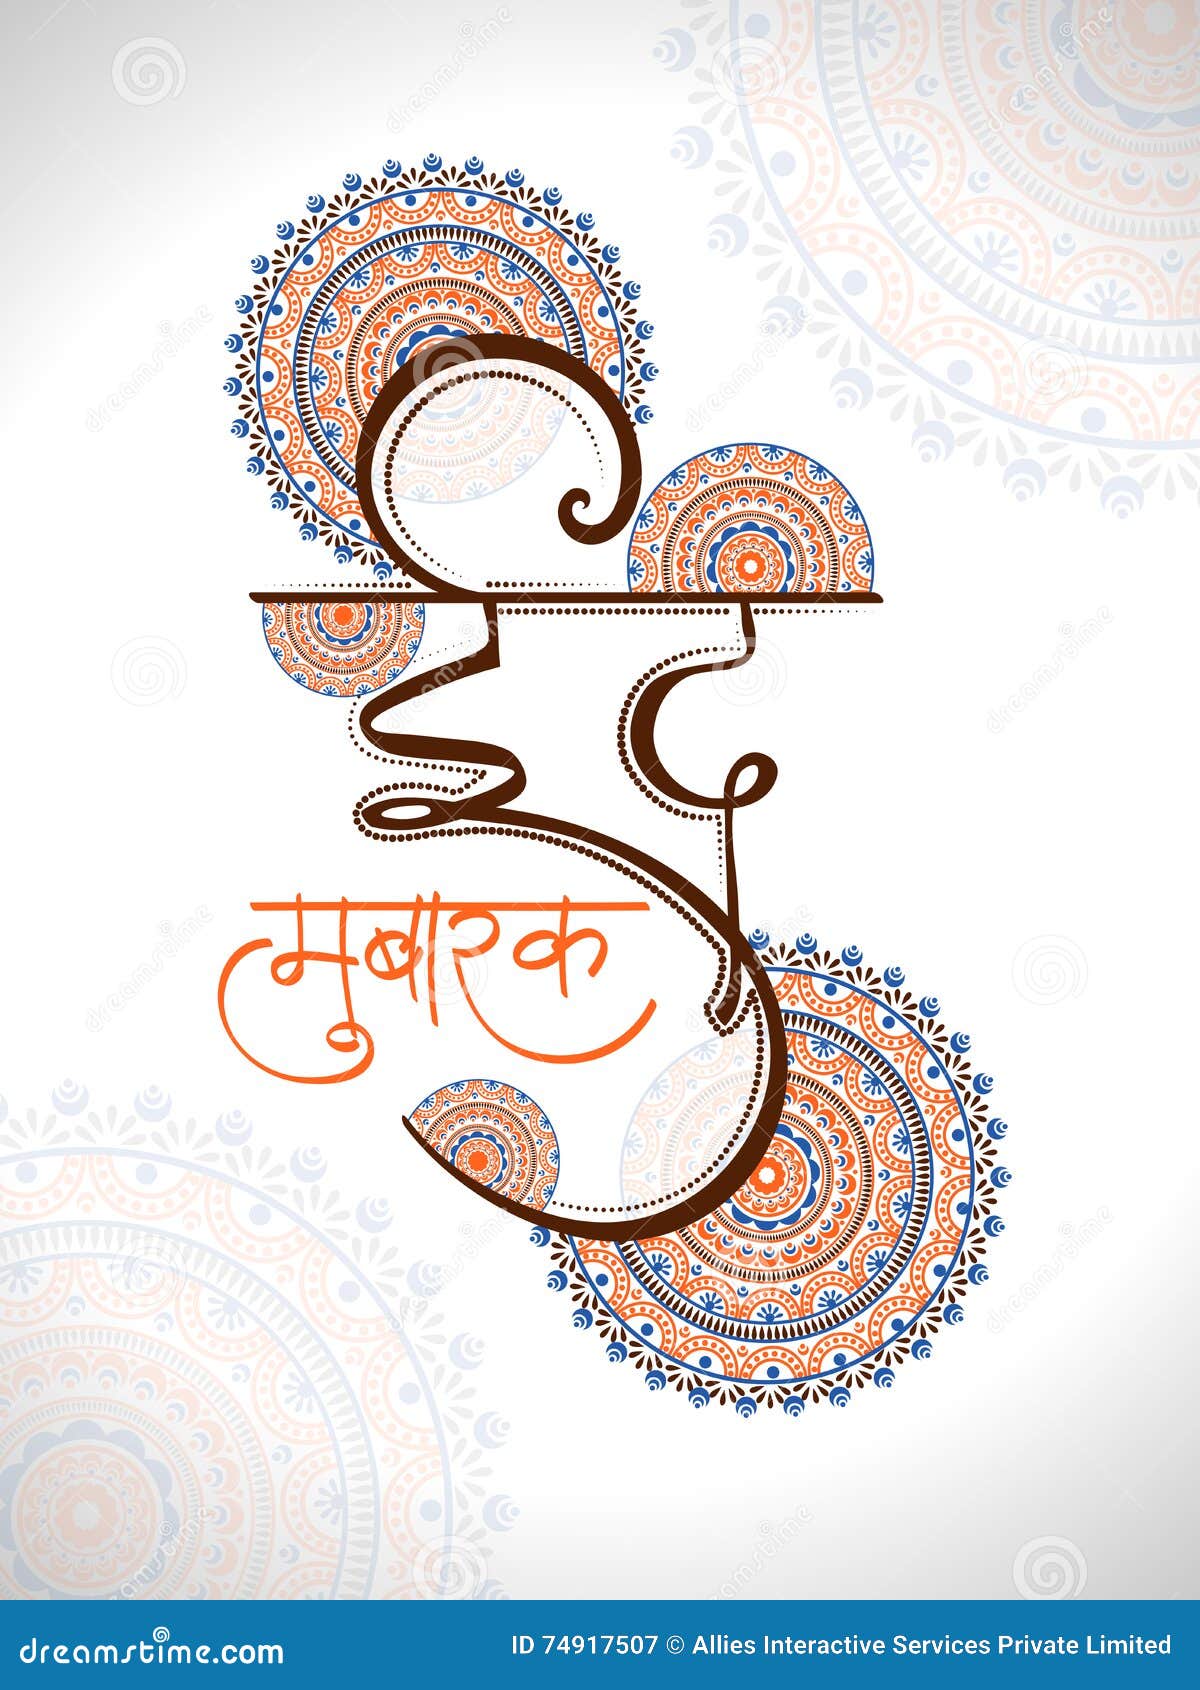 Greeting Card With Hindi Text For Eid Mubarak Stock Illustration